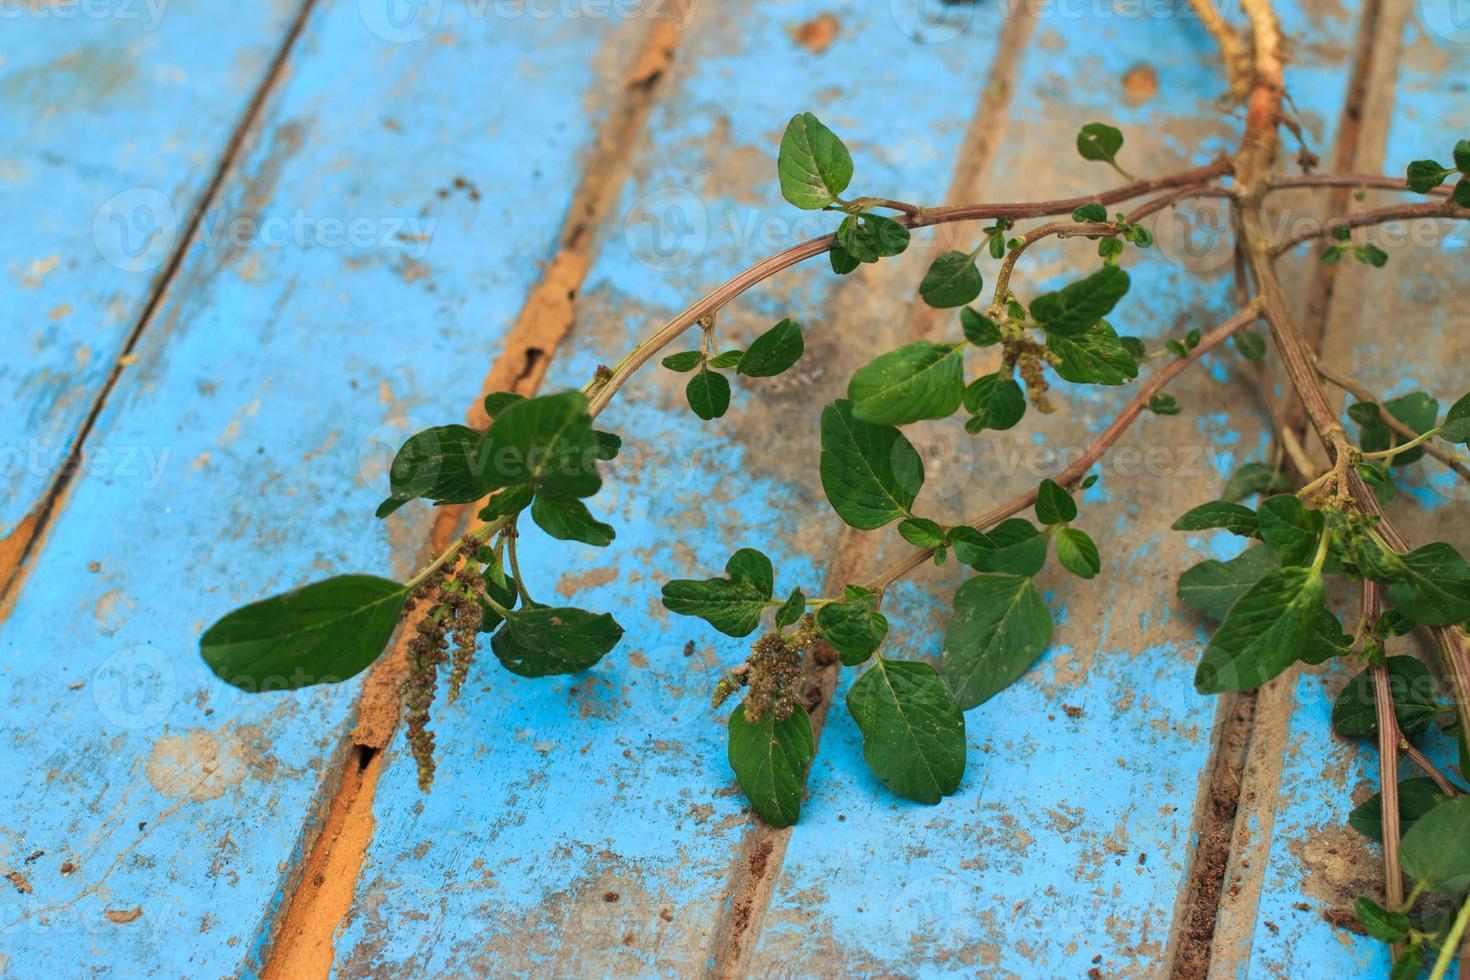 erva daninha da natureza com raiz e solo na velha madeira azul foto